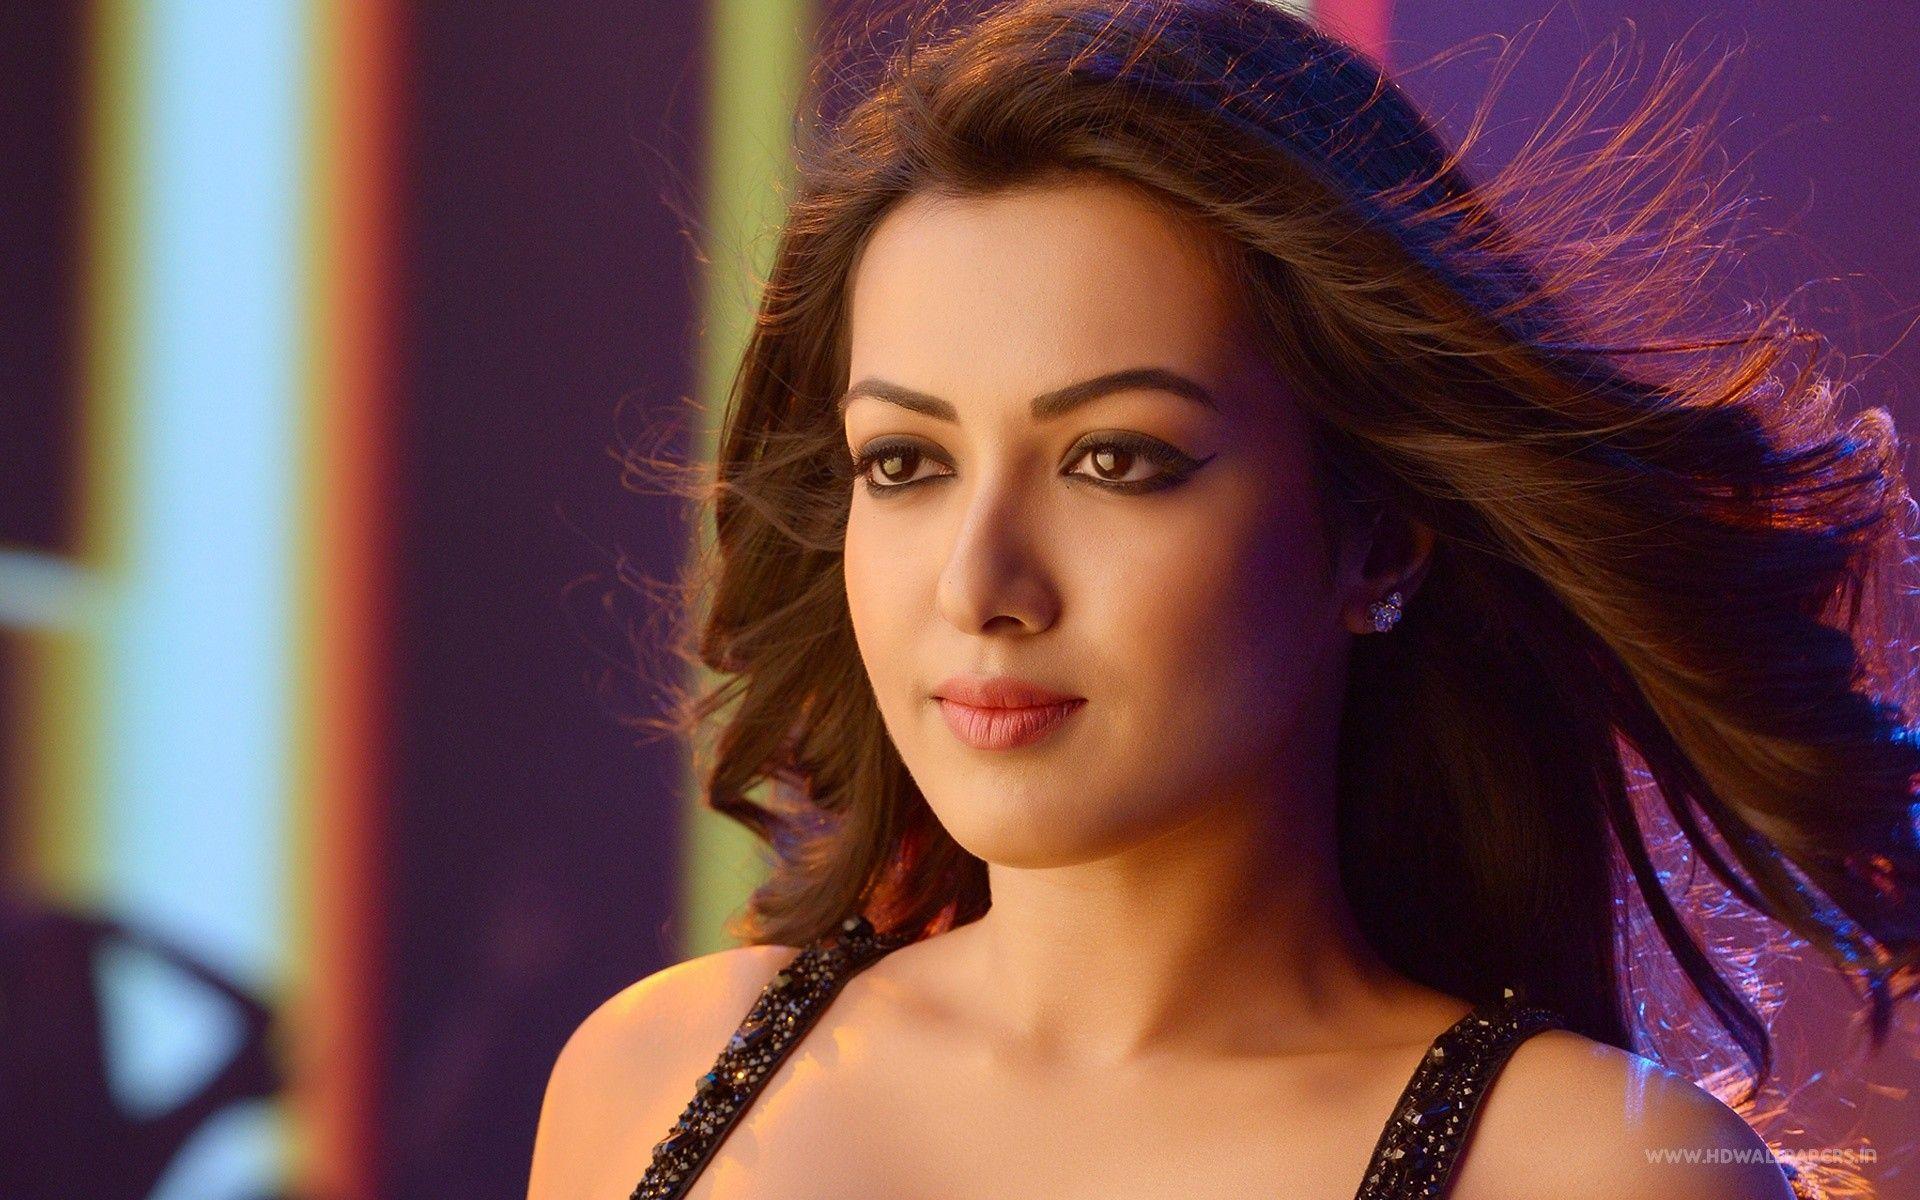 Bollywood Actress Pic Hd Download - Bollywood Actress Hd Wallpapers ...